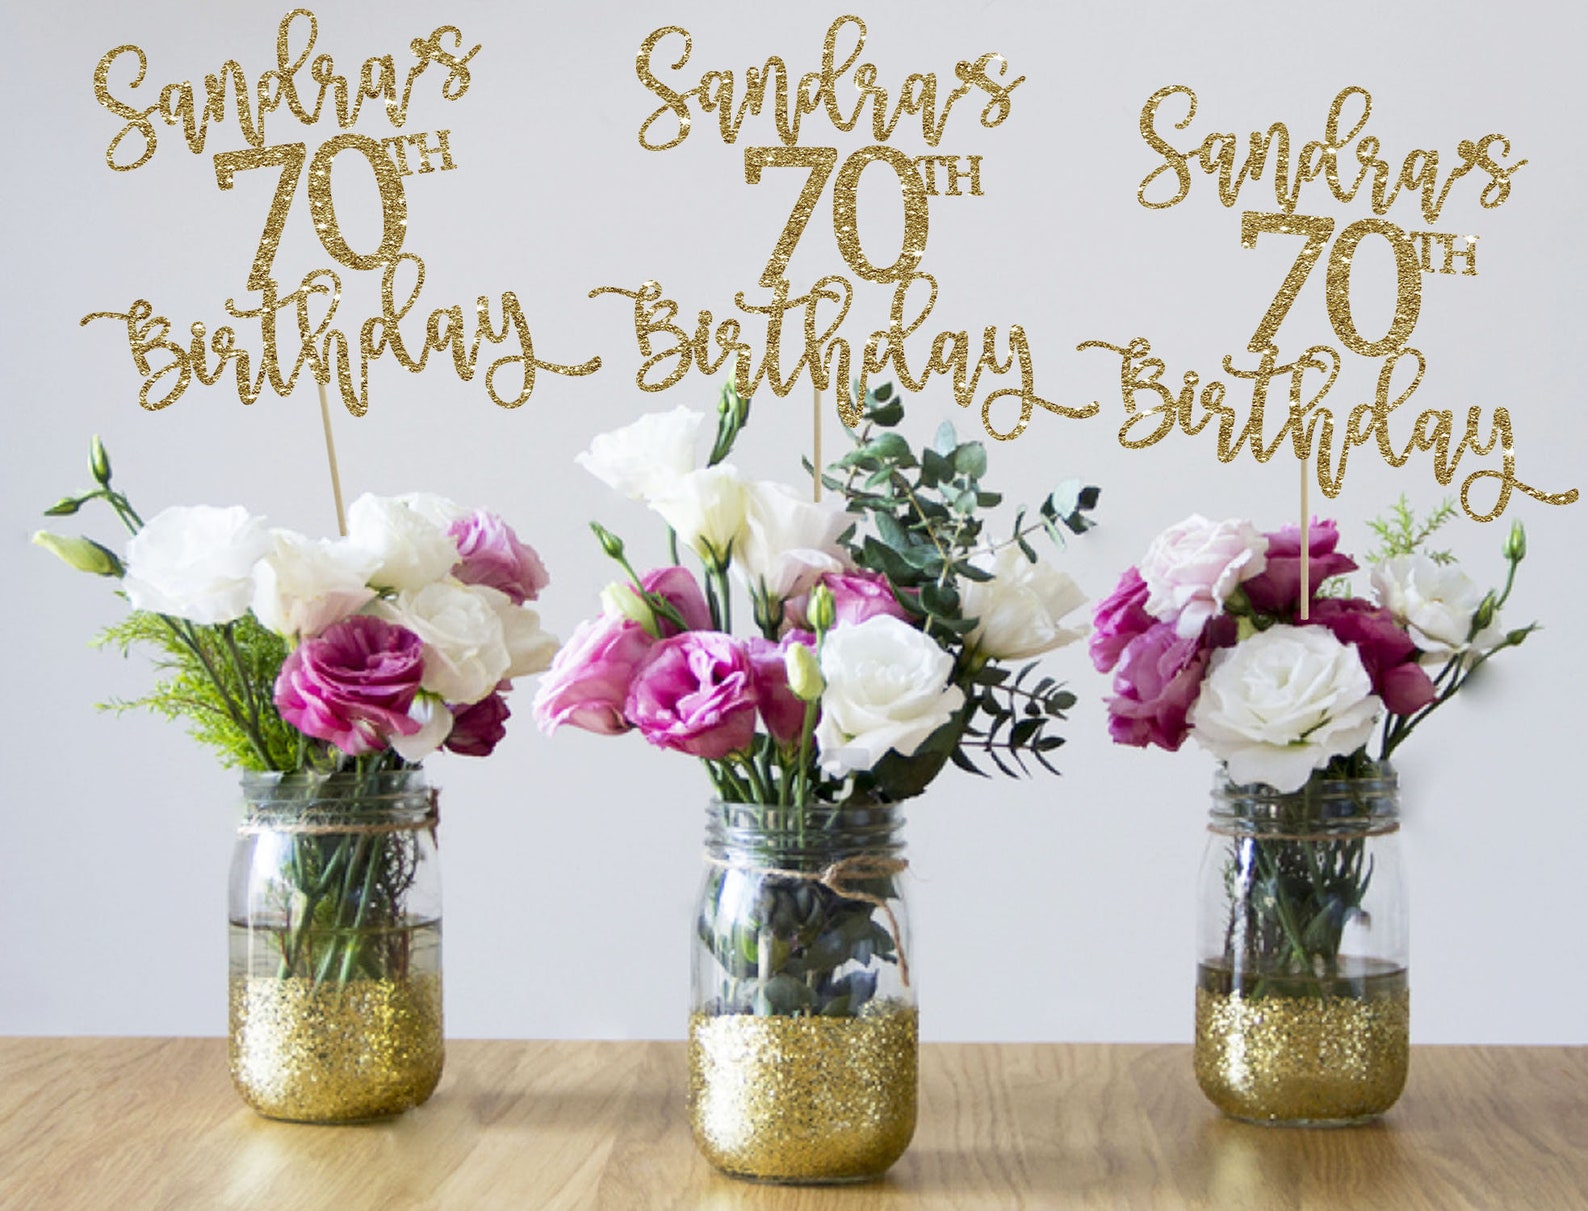 Sandra's 70th Birthday - Shiny Gold 70th birthday centerpiece - personalized 70th birthday decorations 